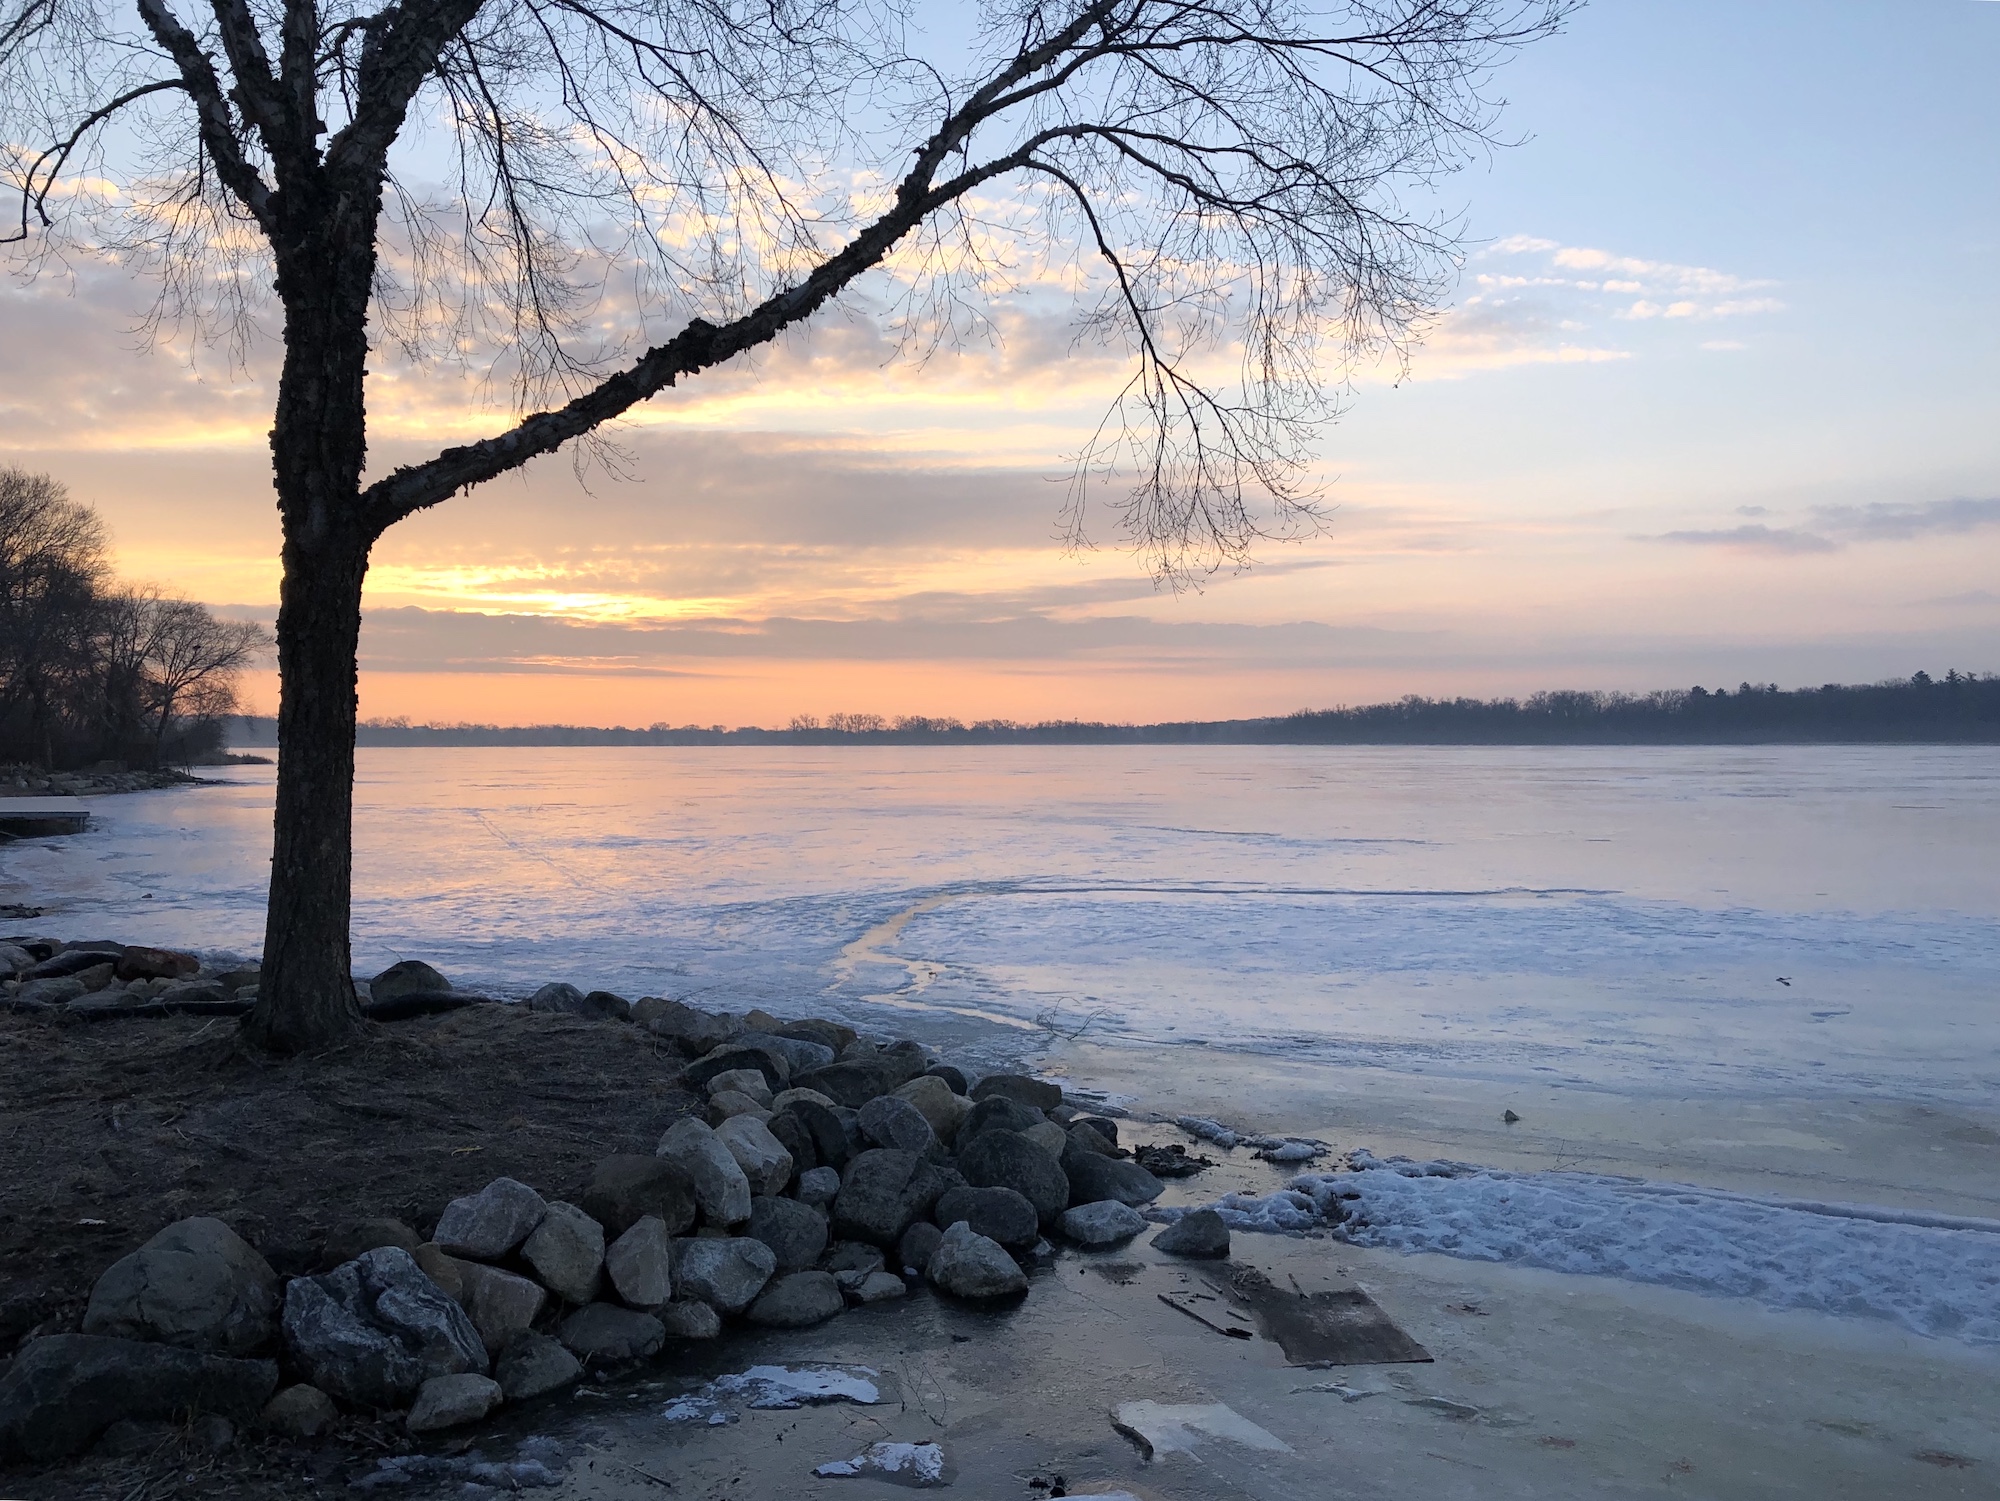 Lake Wingra on March 18, 2019.